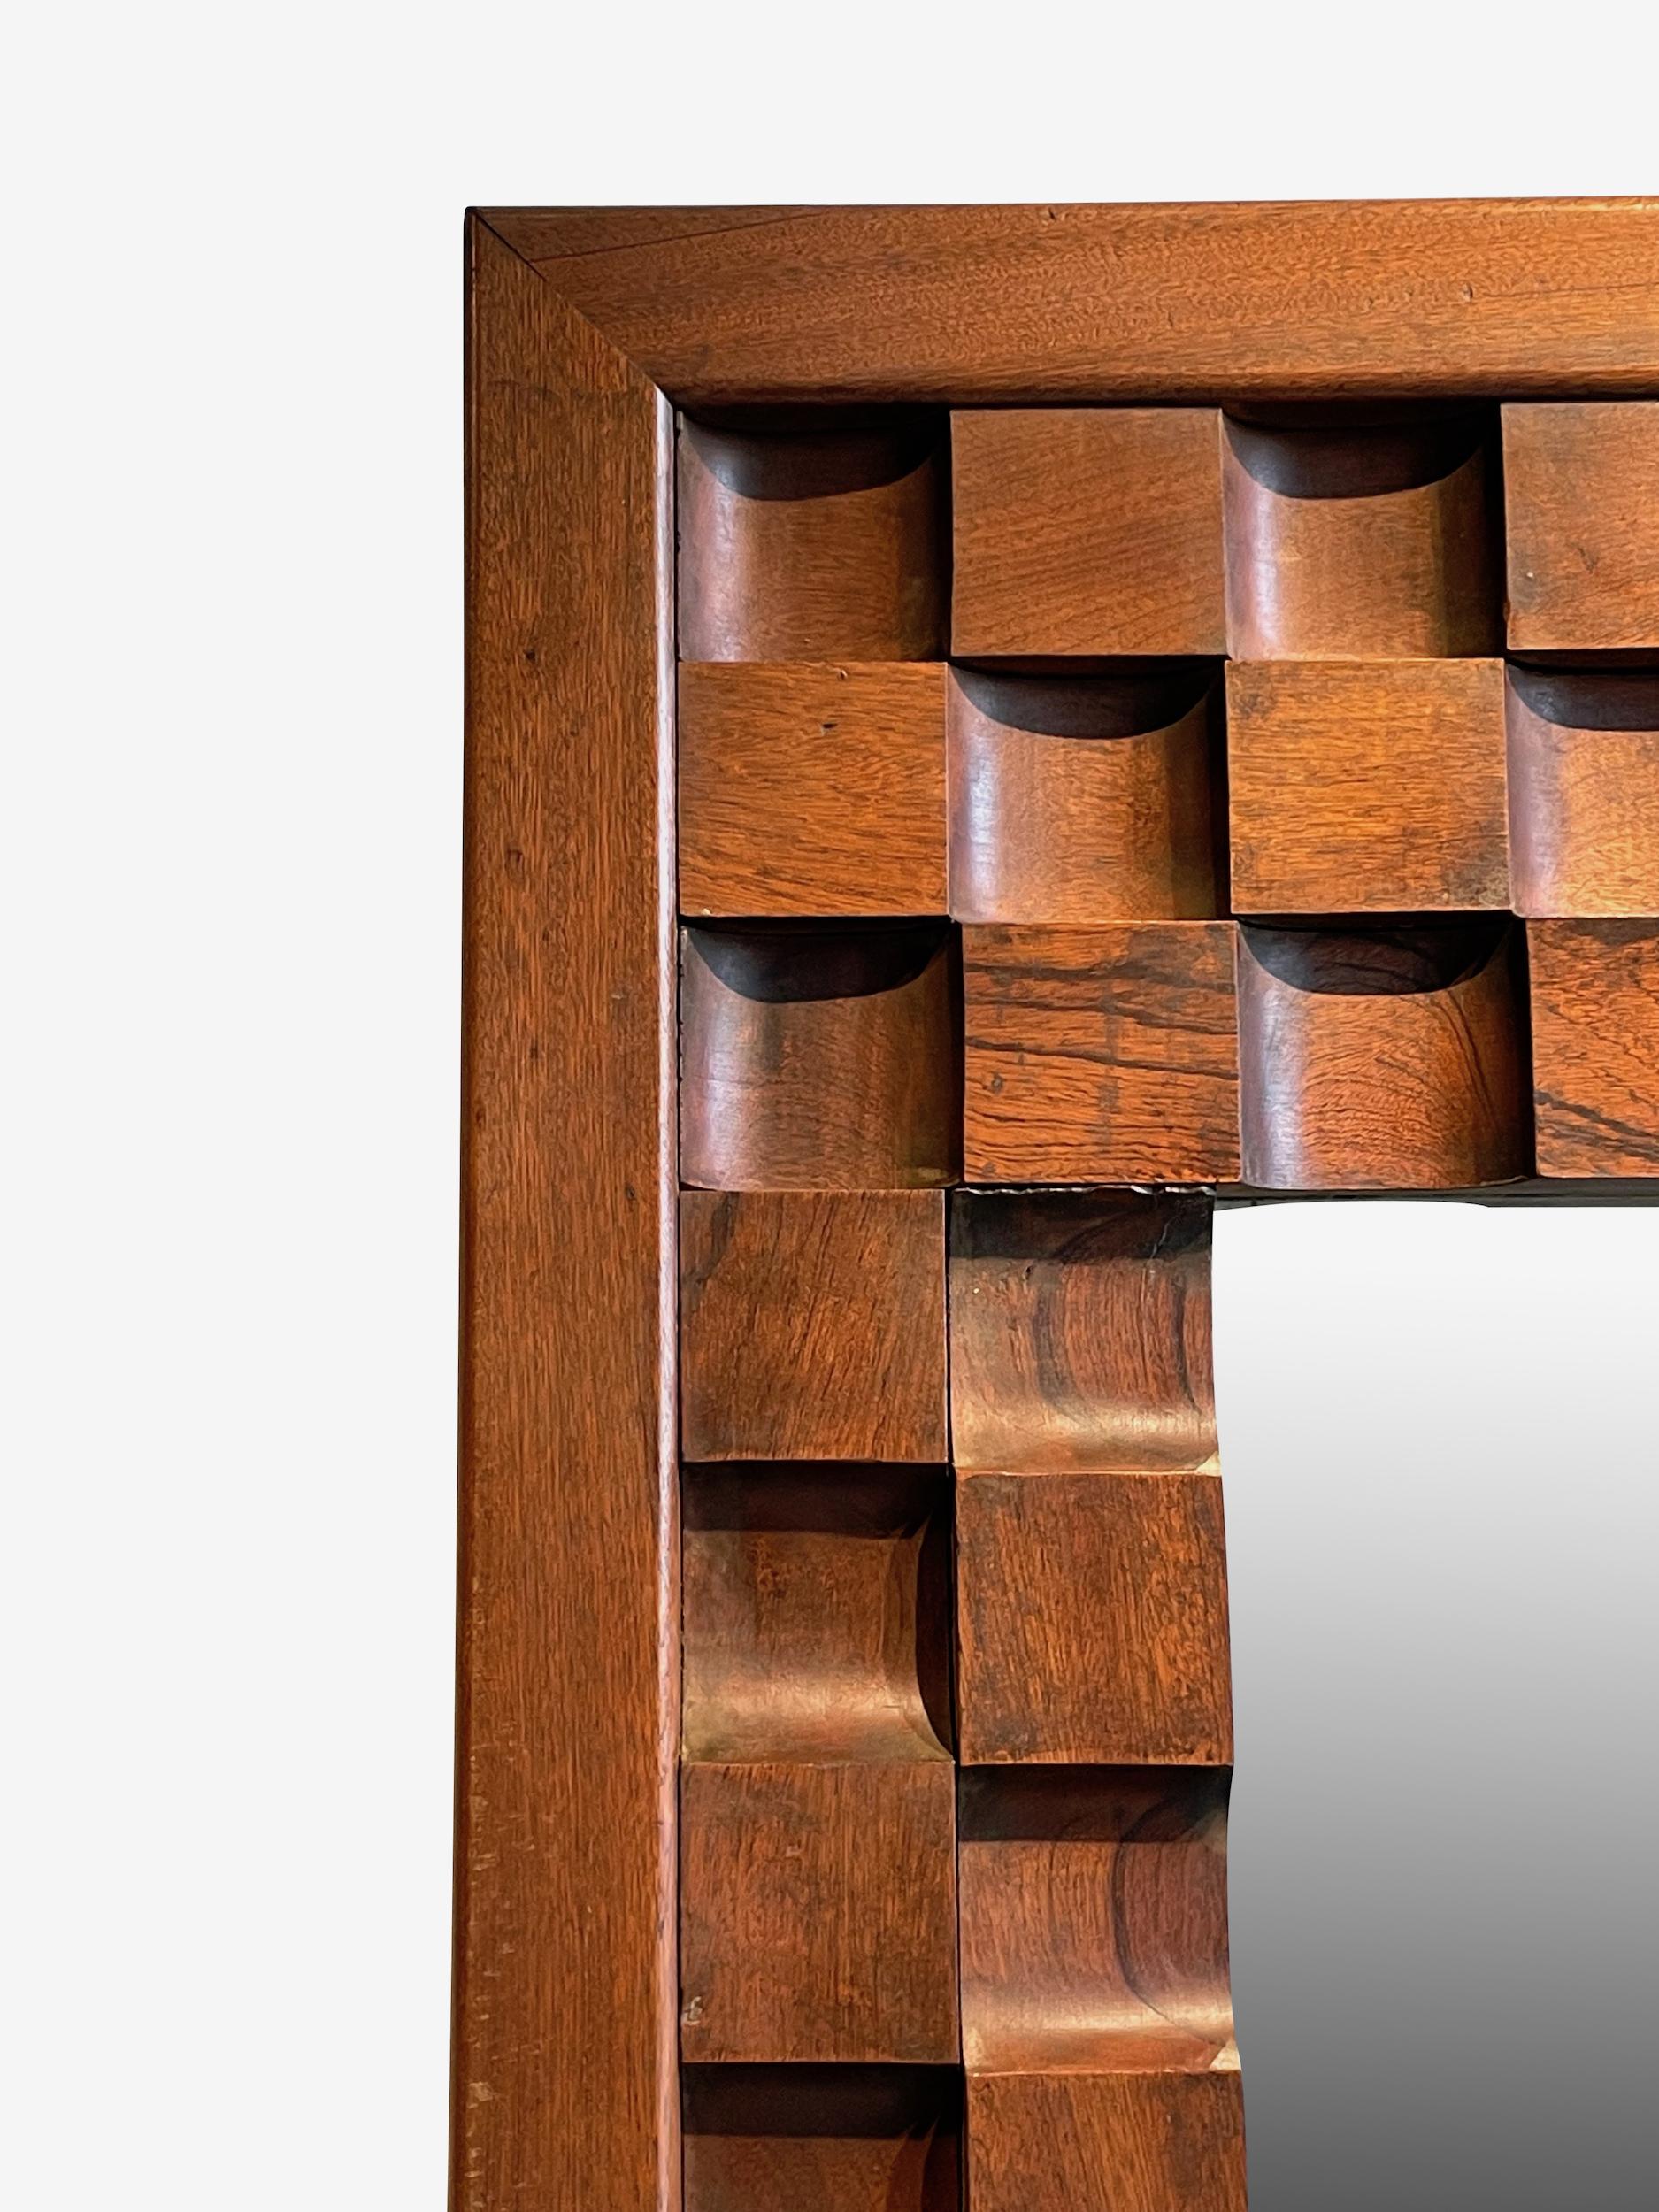 1960s Spanish extra large Brutalist design wood frame mirror.
Checkerboard design.
Walnut wood.

